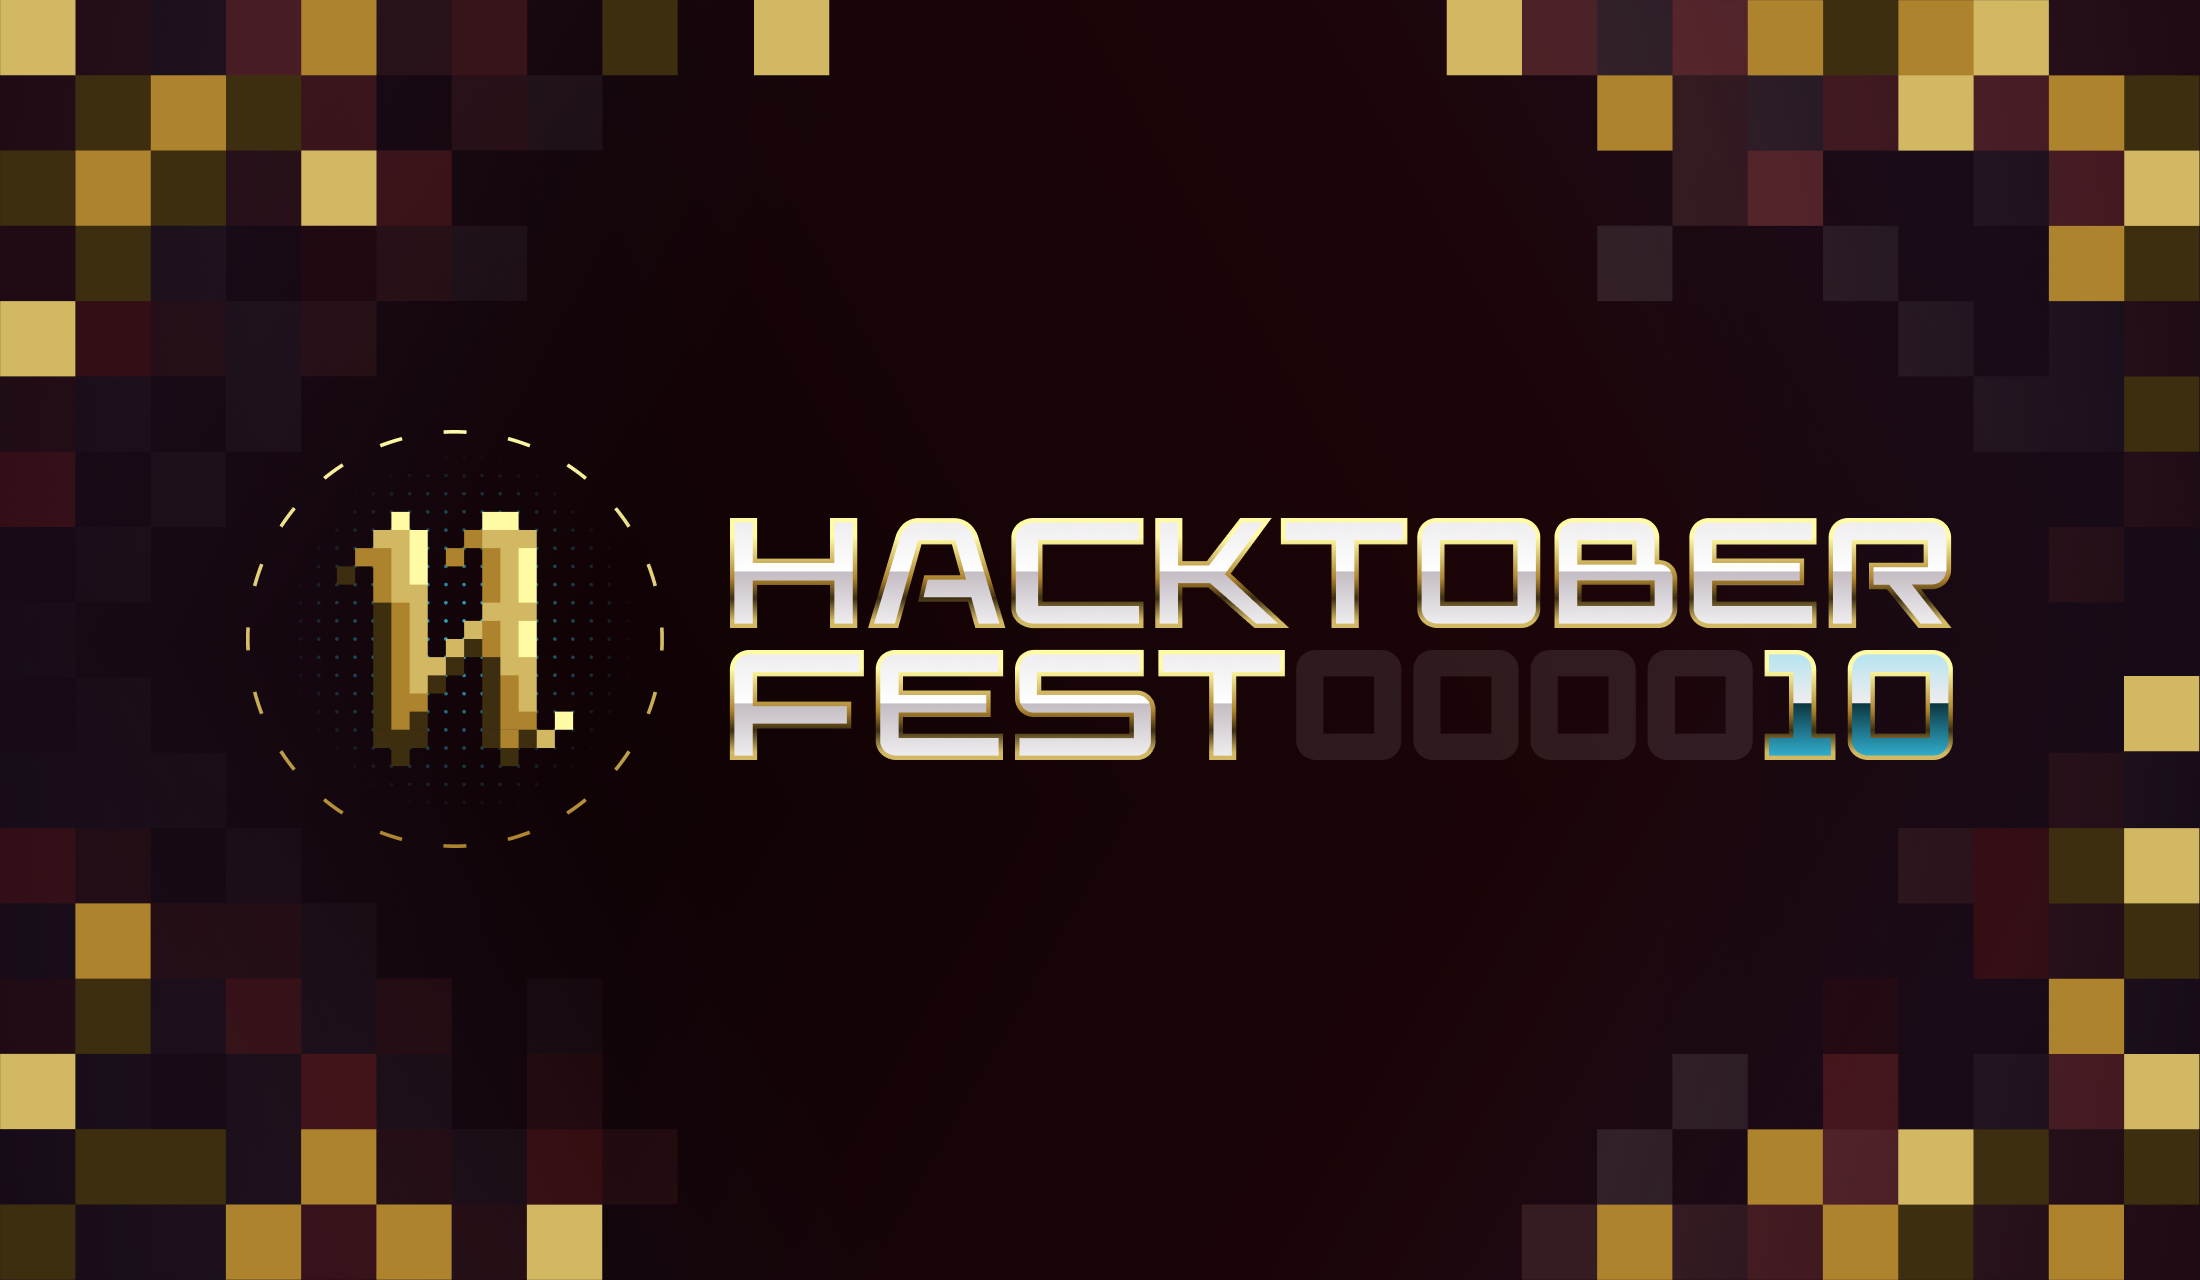 How to participate in Hacktoberfest